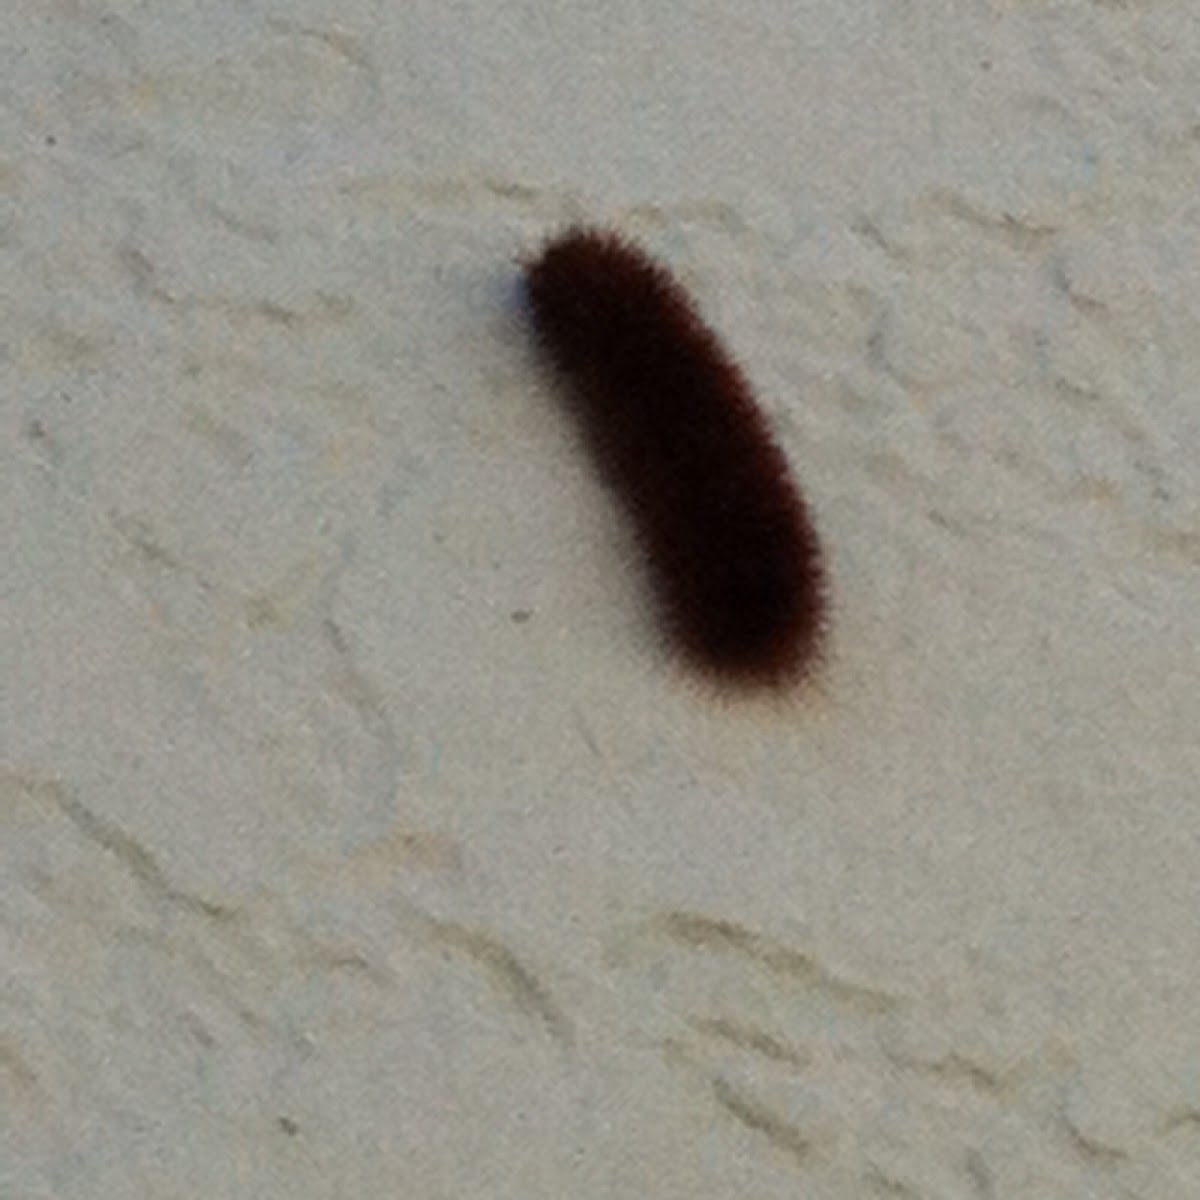 Woollie caterpillar